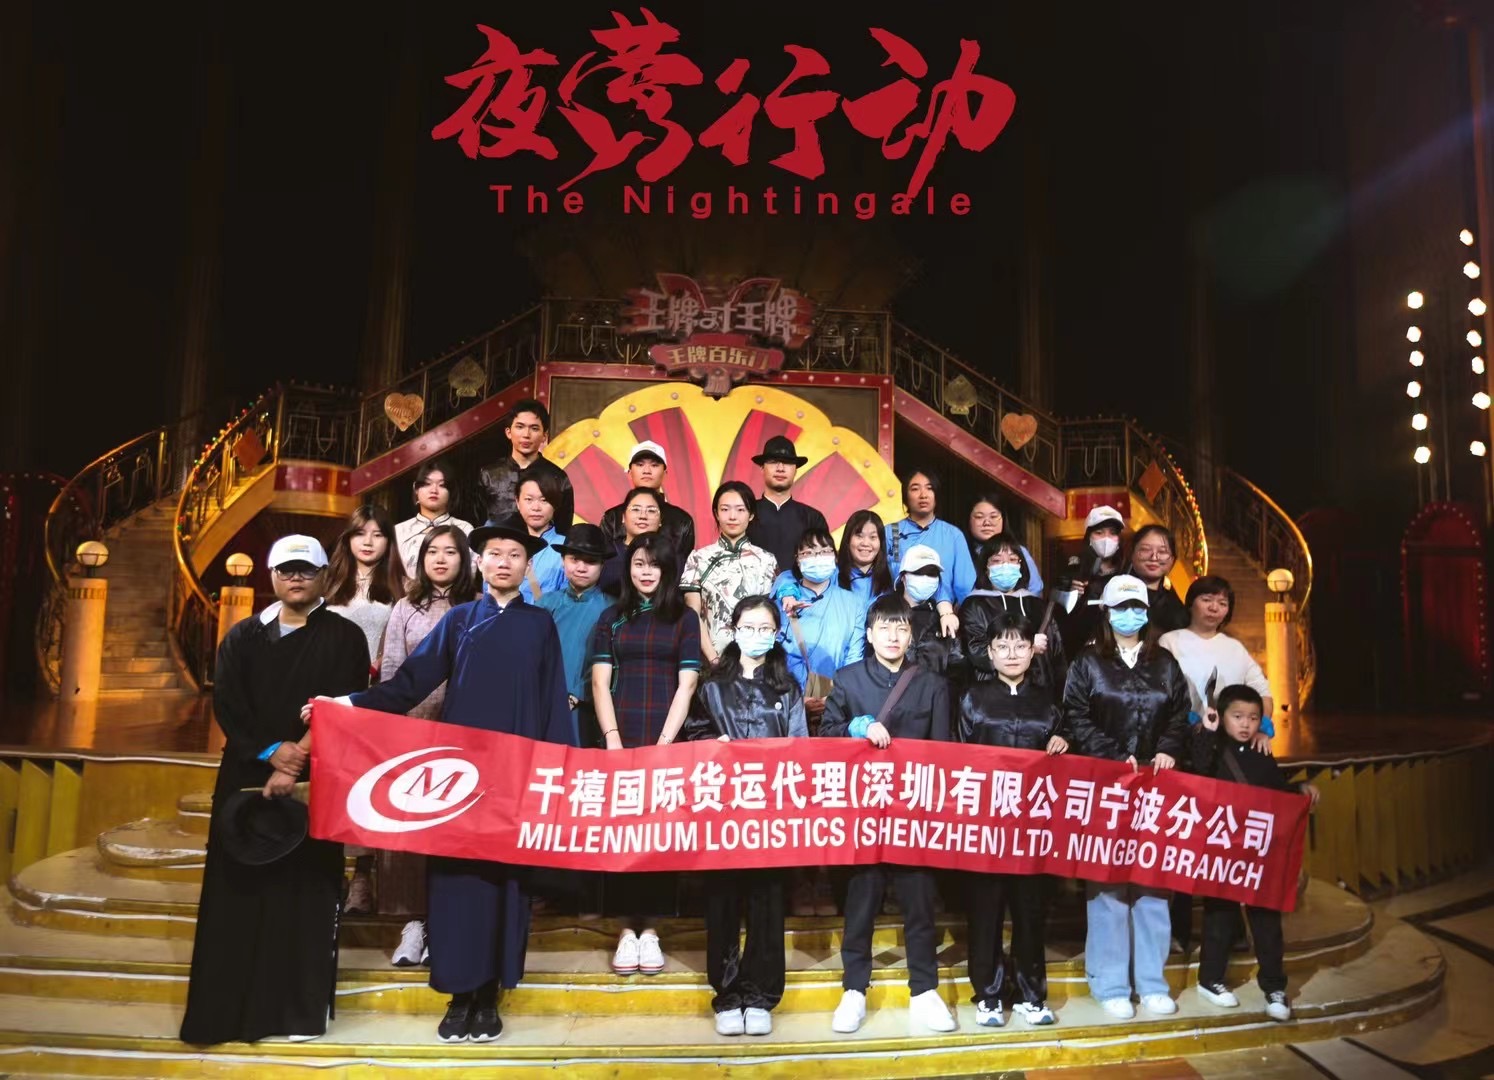 The nightingale, , team building activity of  Millennium Logistics (Shenzhen) Ltd. Ningbo Branch